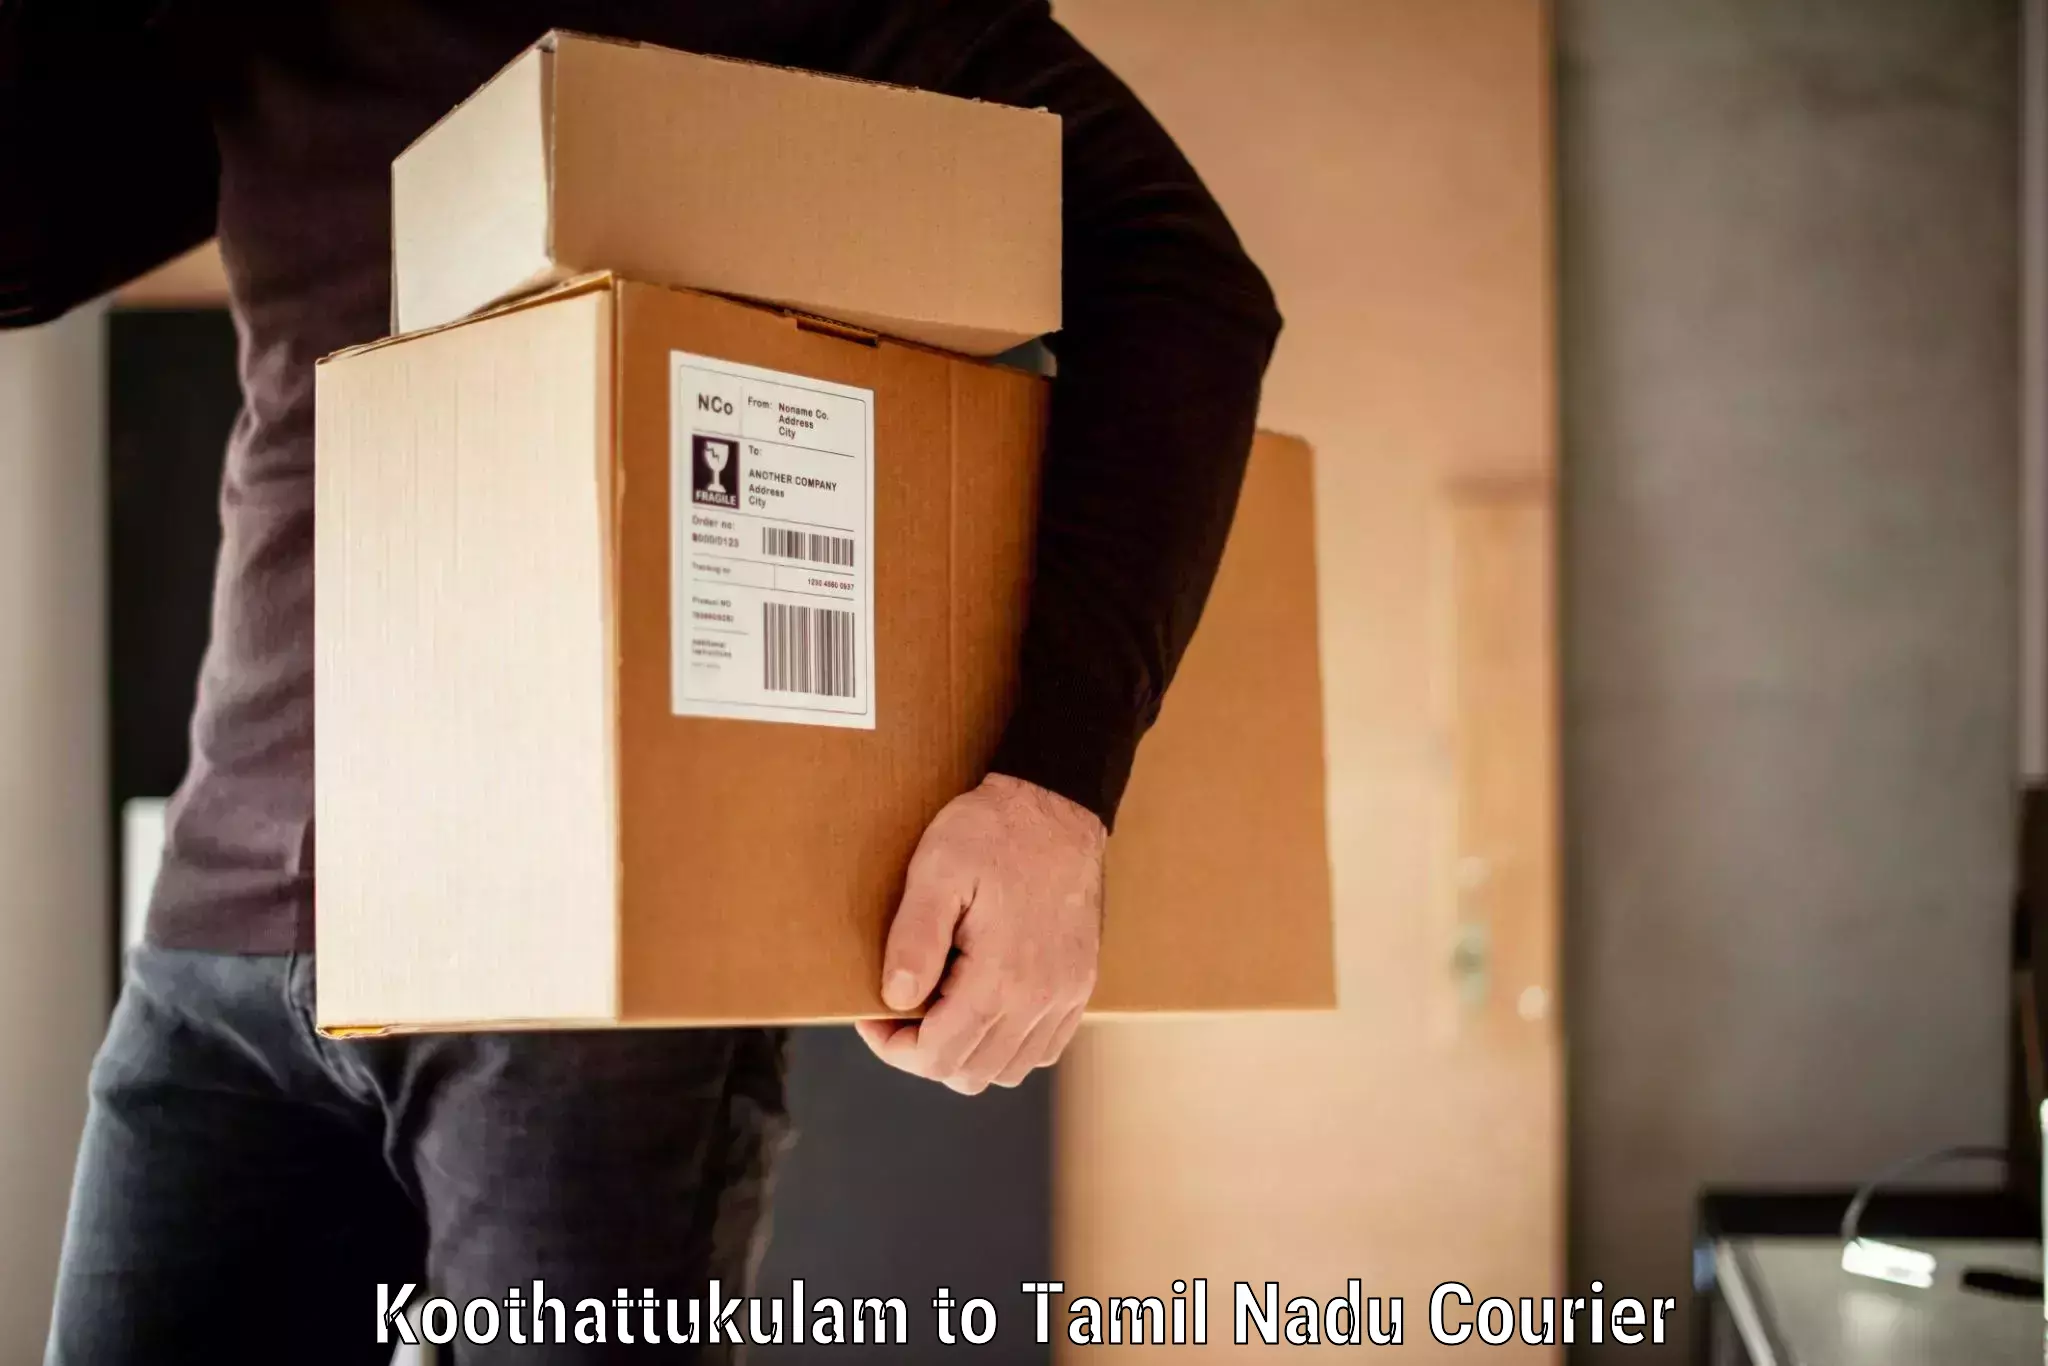 Luggage shipment specialists Koothattukulam to Chennai Port